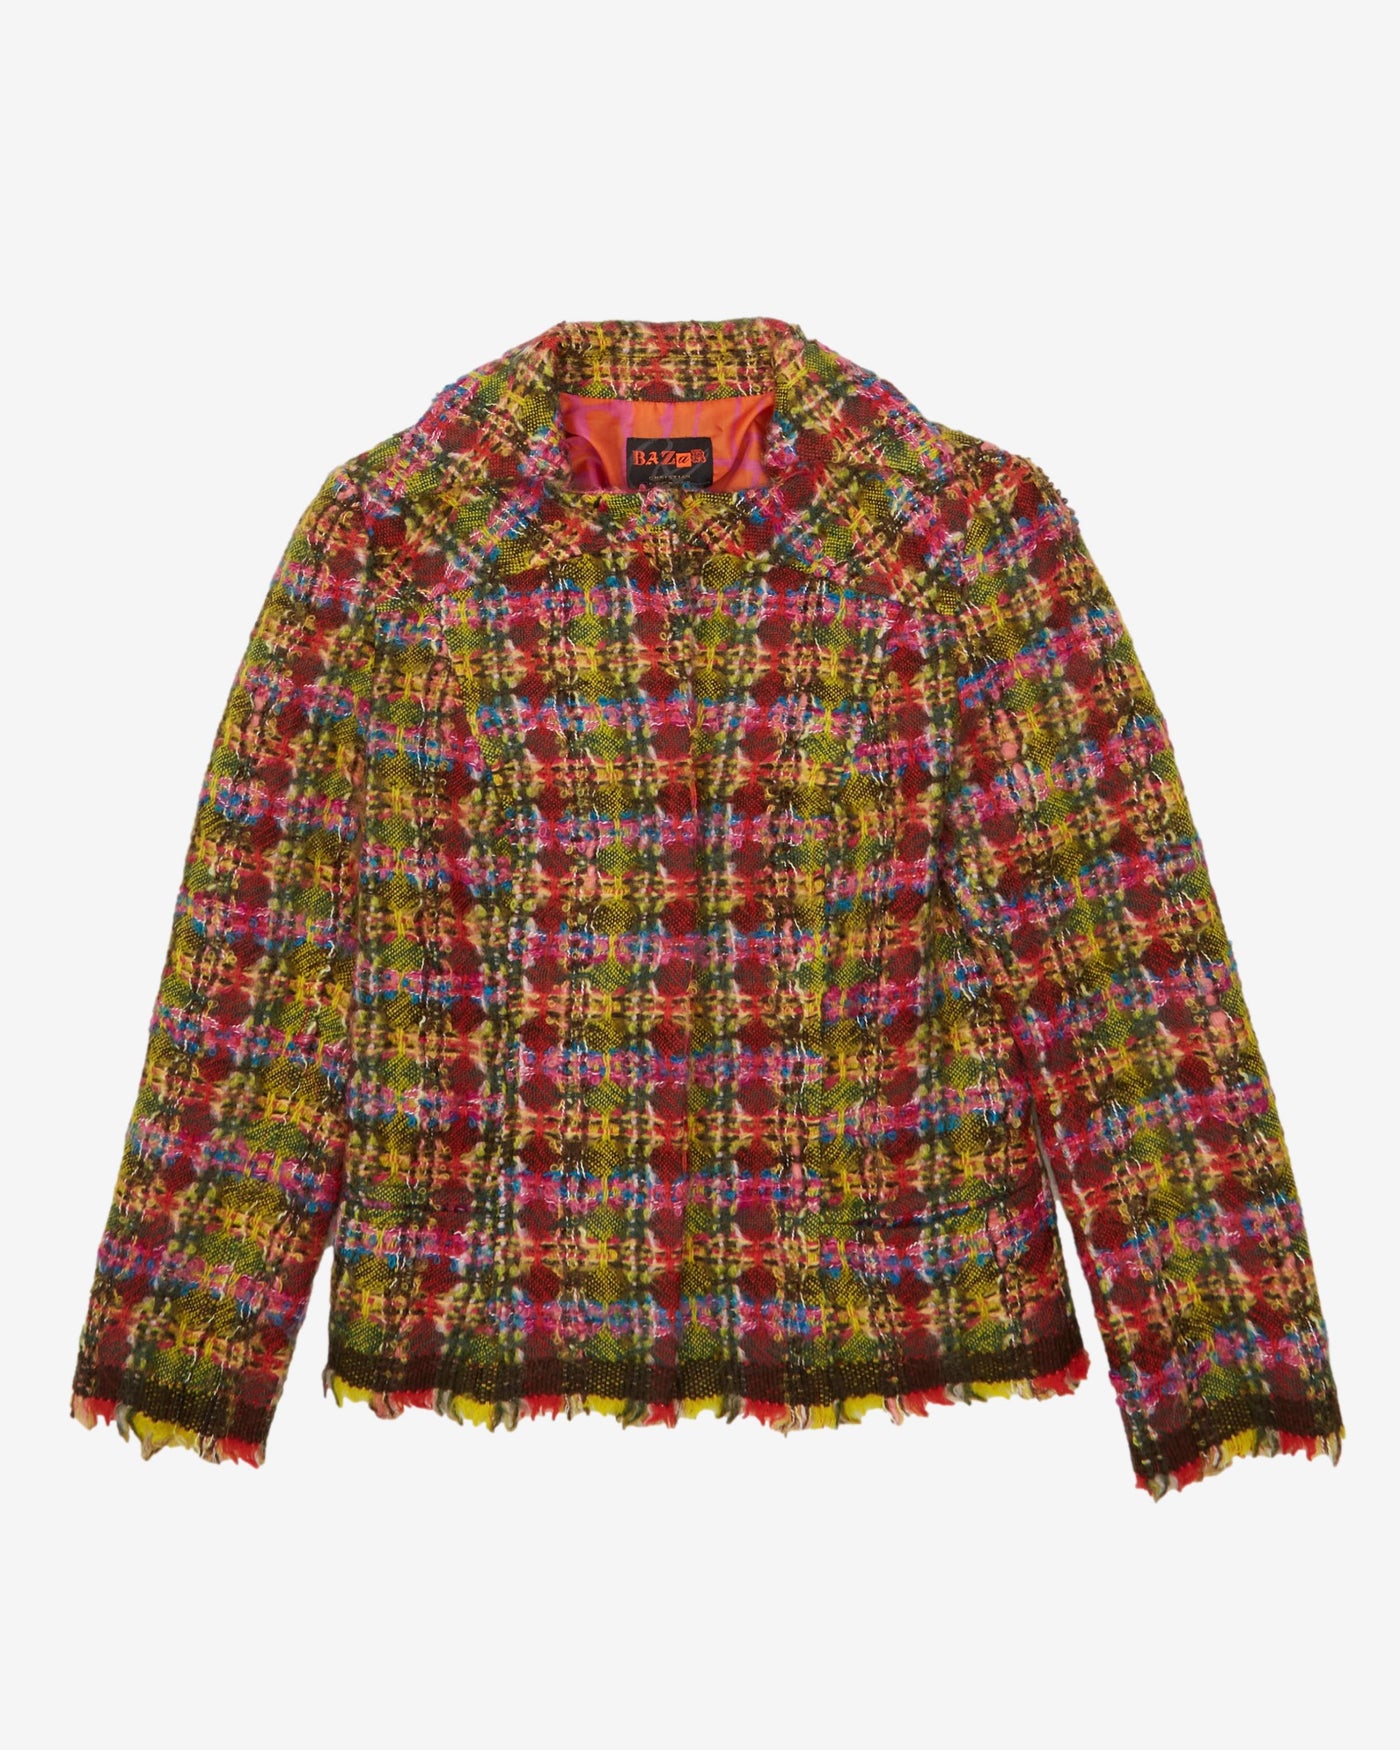 Bazar Christian Lacroix Tweed Style Blazer Jacket - S